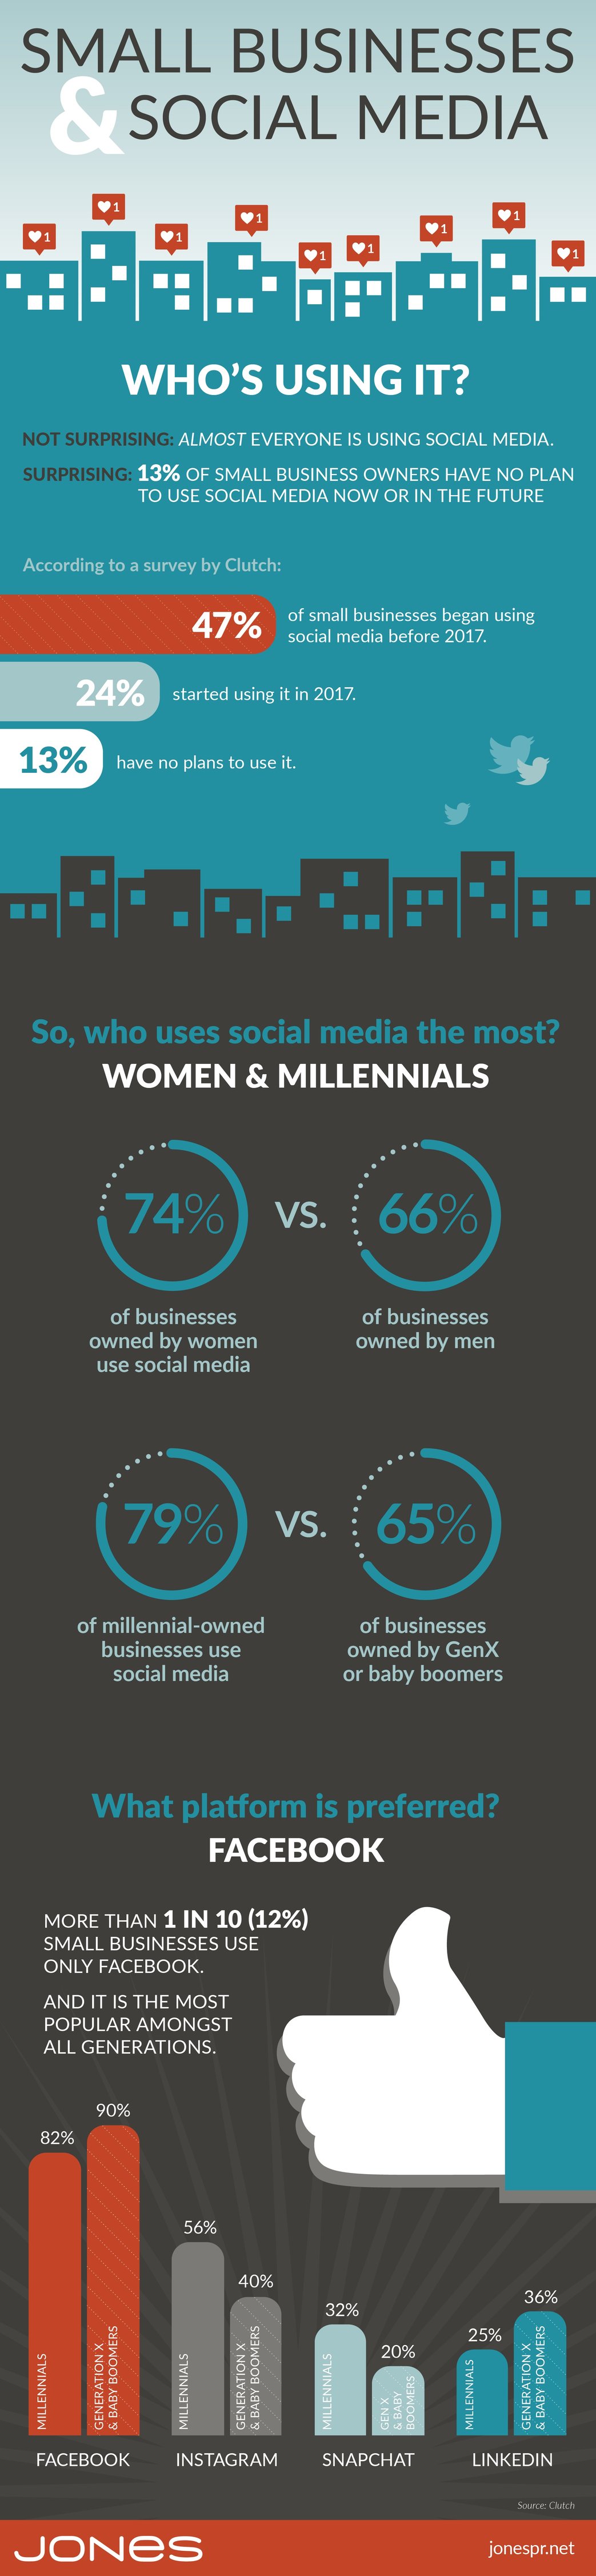 jones-infographic-small-biz-who-uses-social-media-01